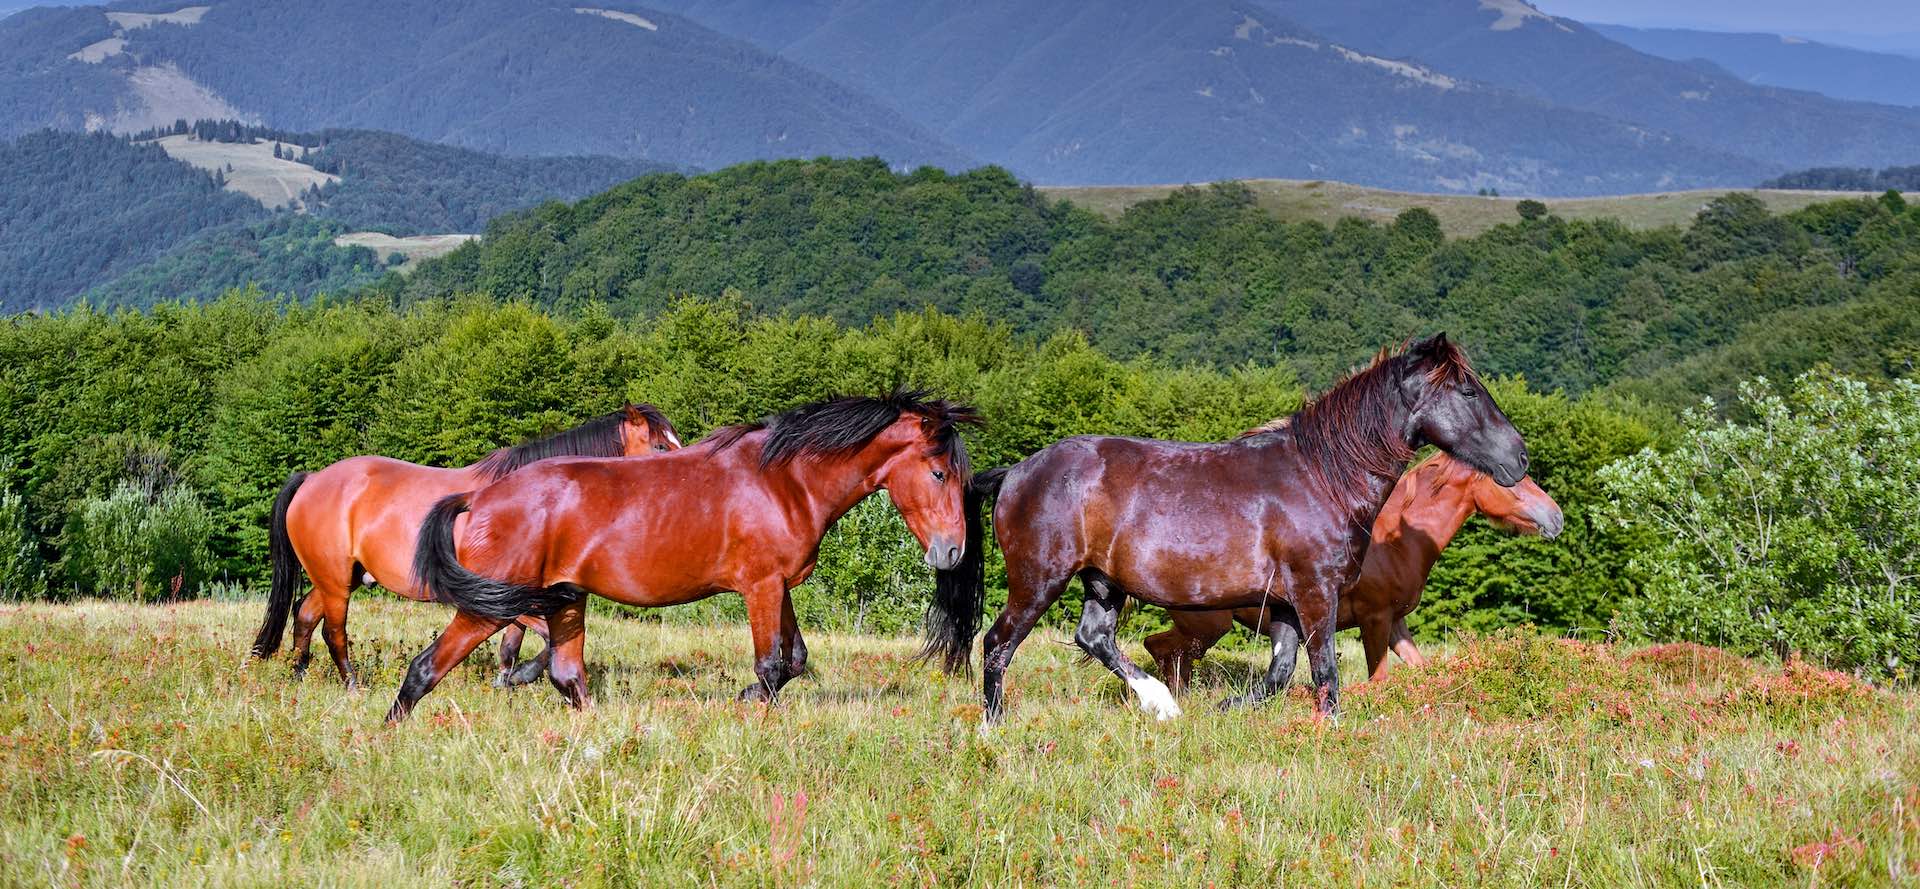 horseriding-poland-nature